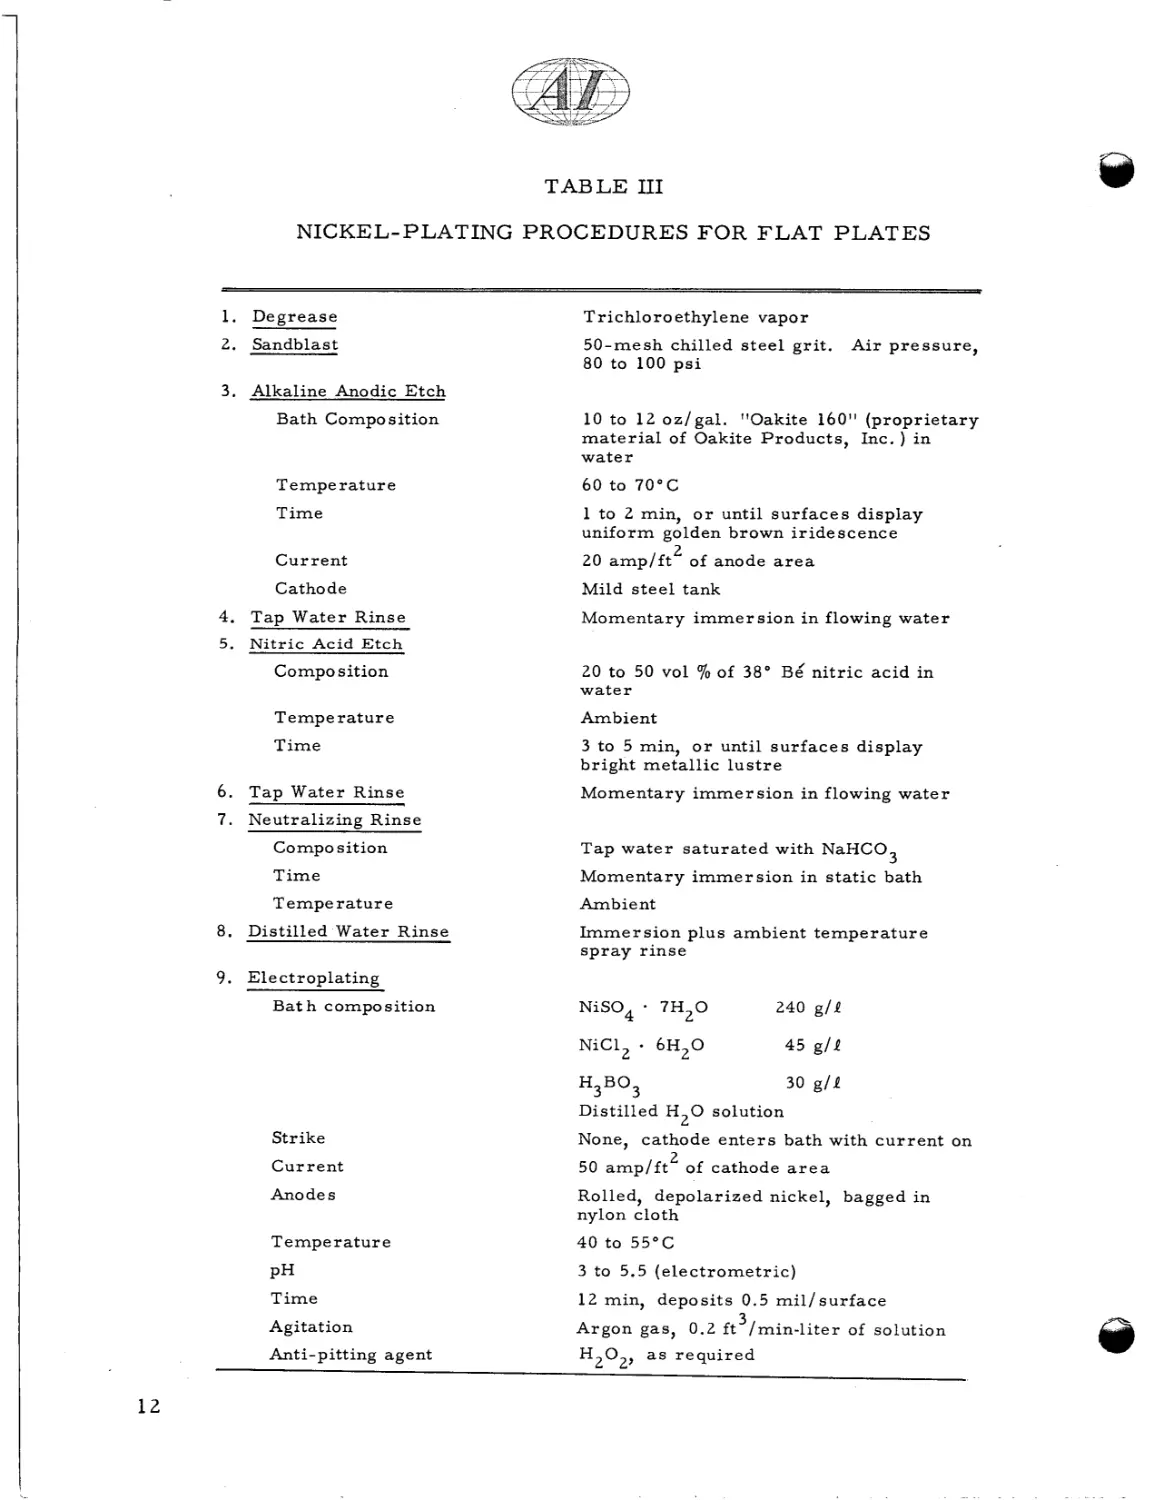 111 Nickel Plating Procedures for Flat Plates